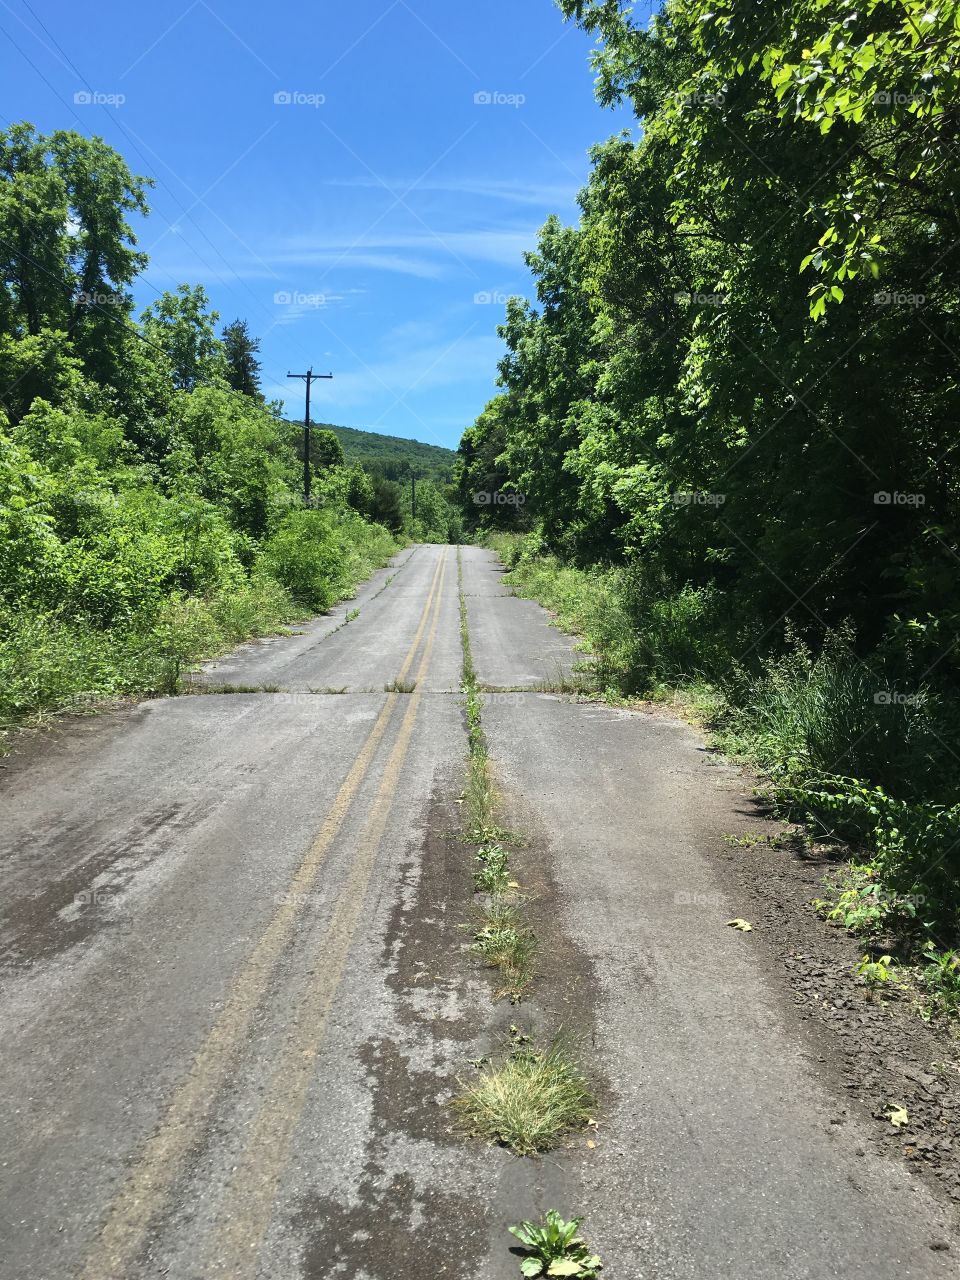 Hiking abandoned road